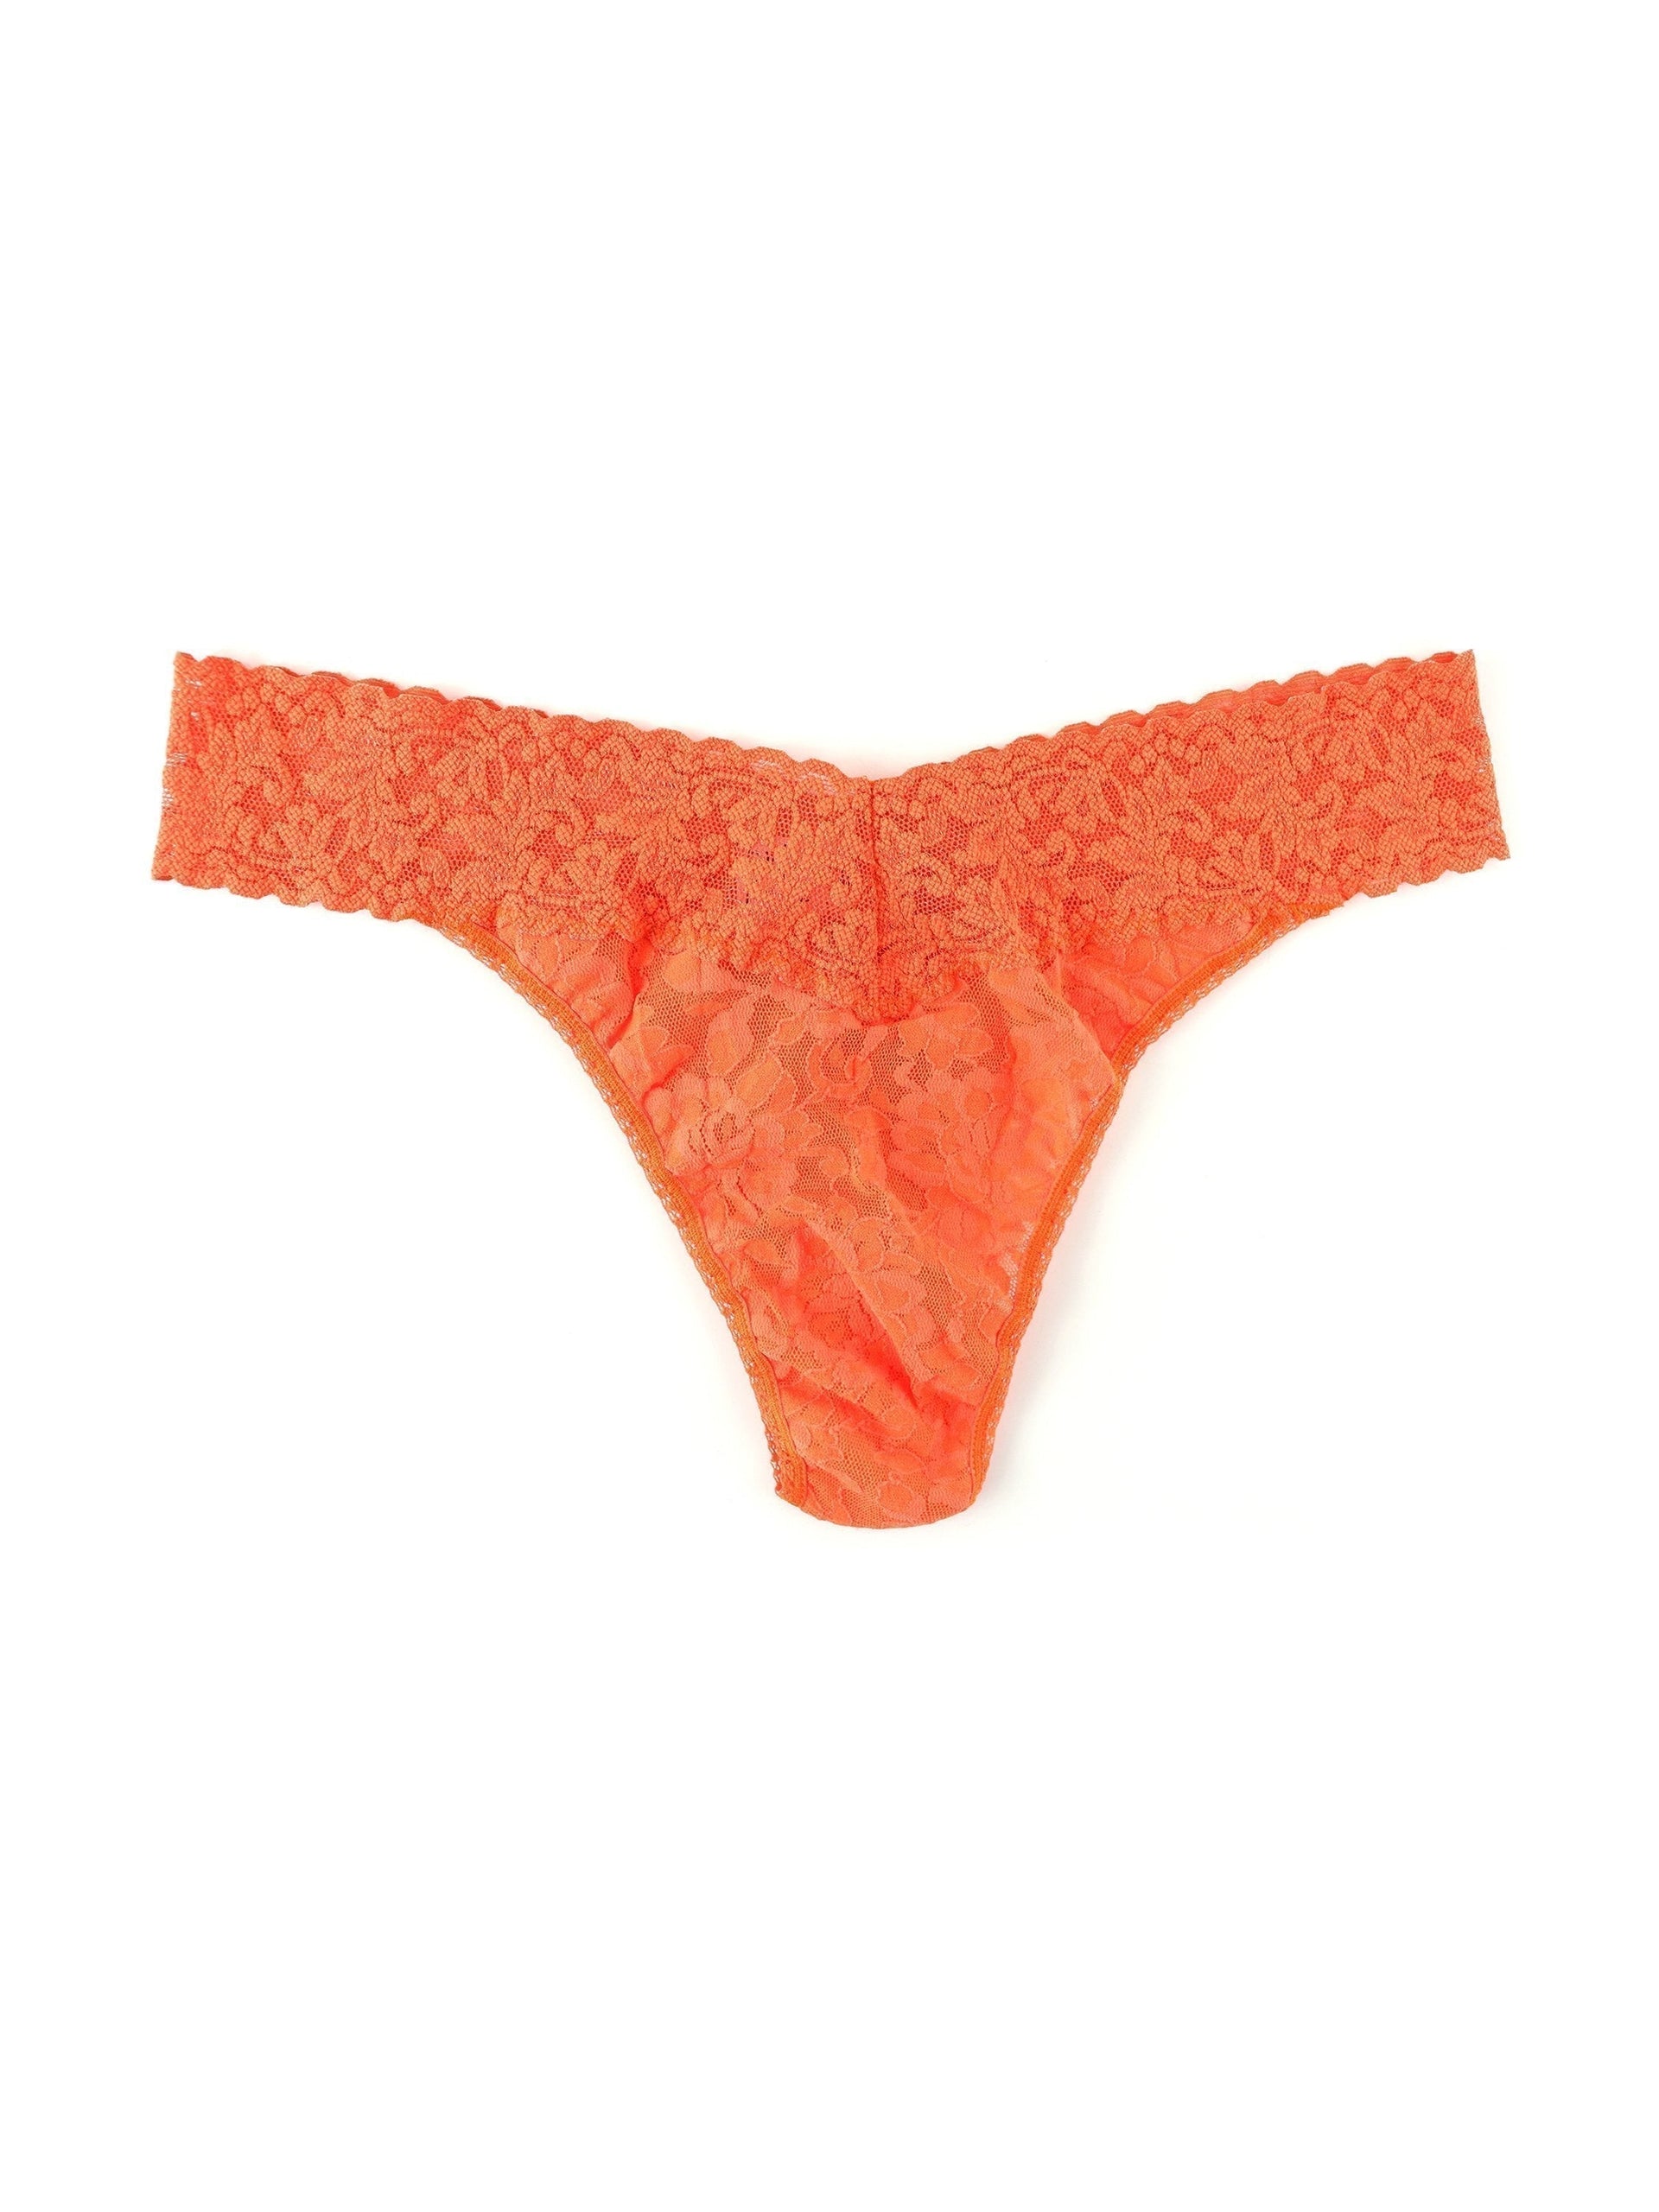 Signature Lace Original Rise Thong Orange Sparkle | Hanky Panky